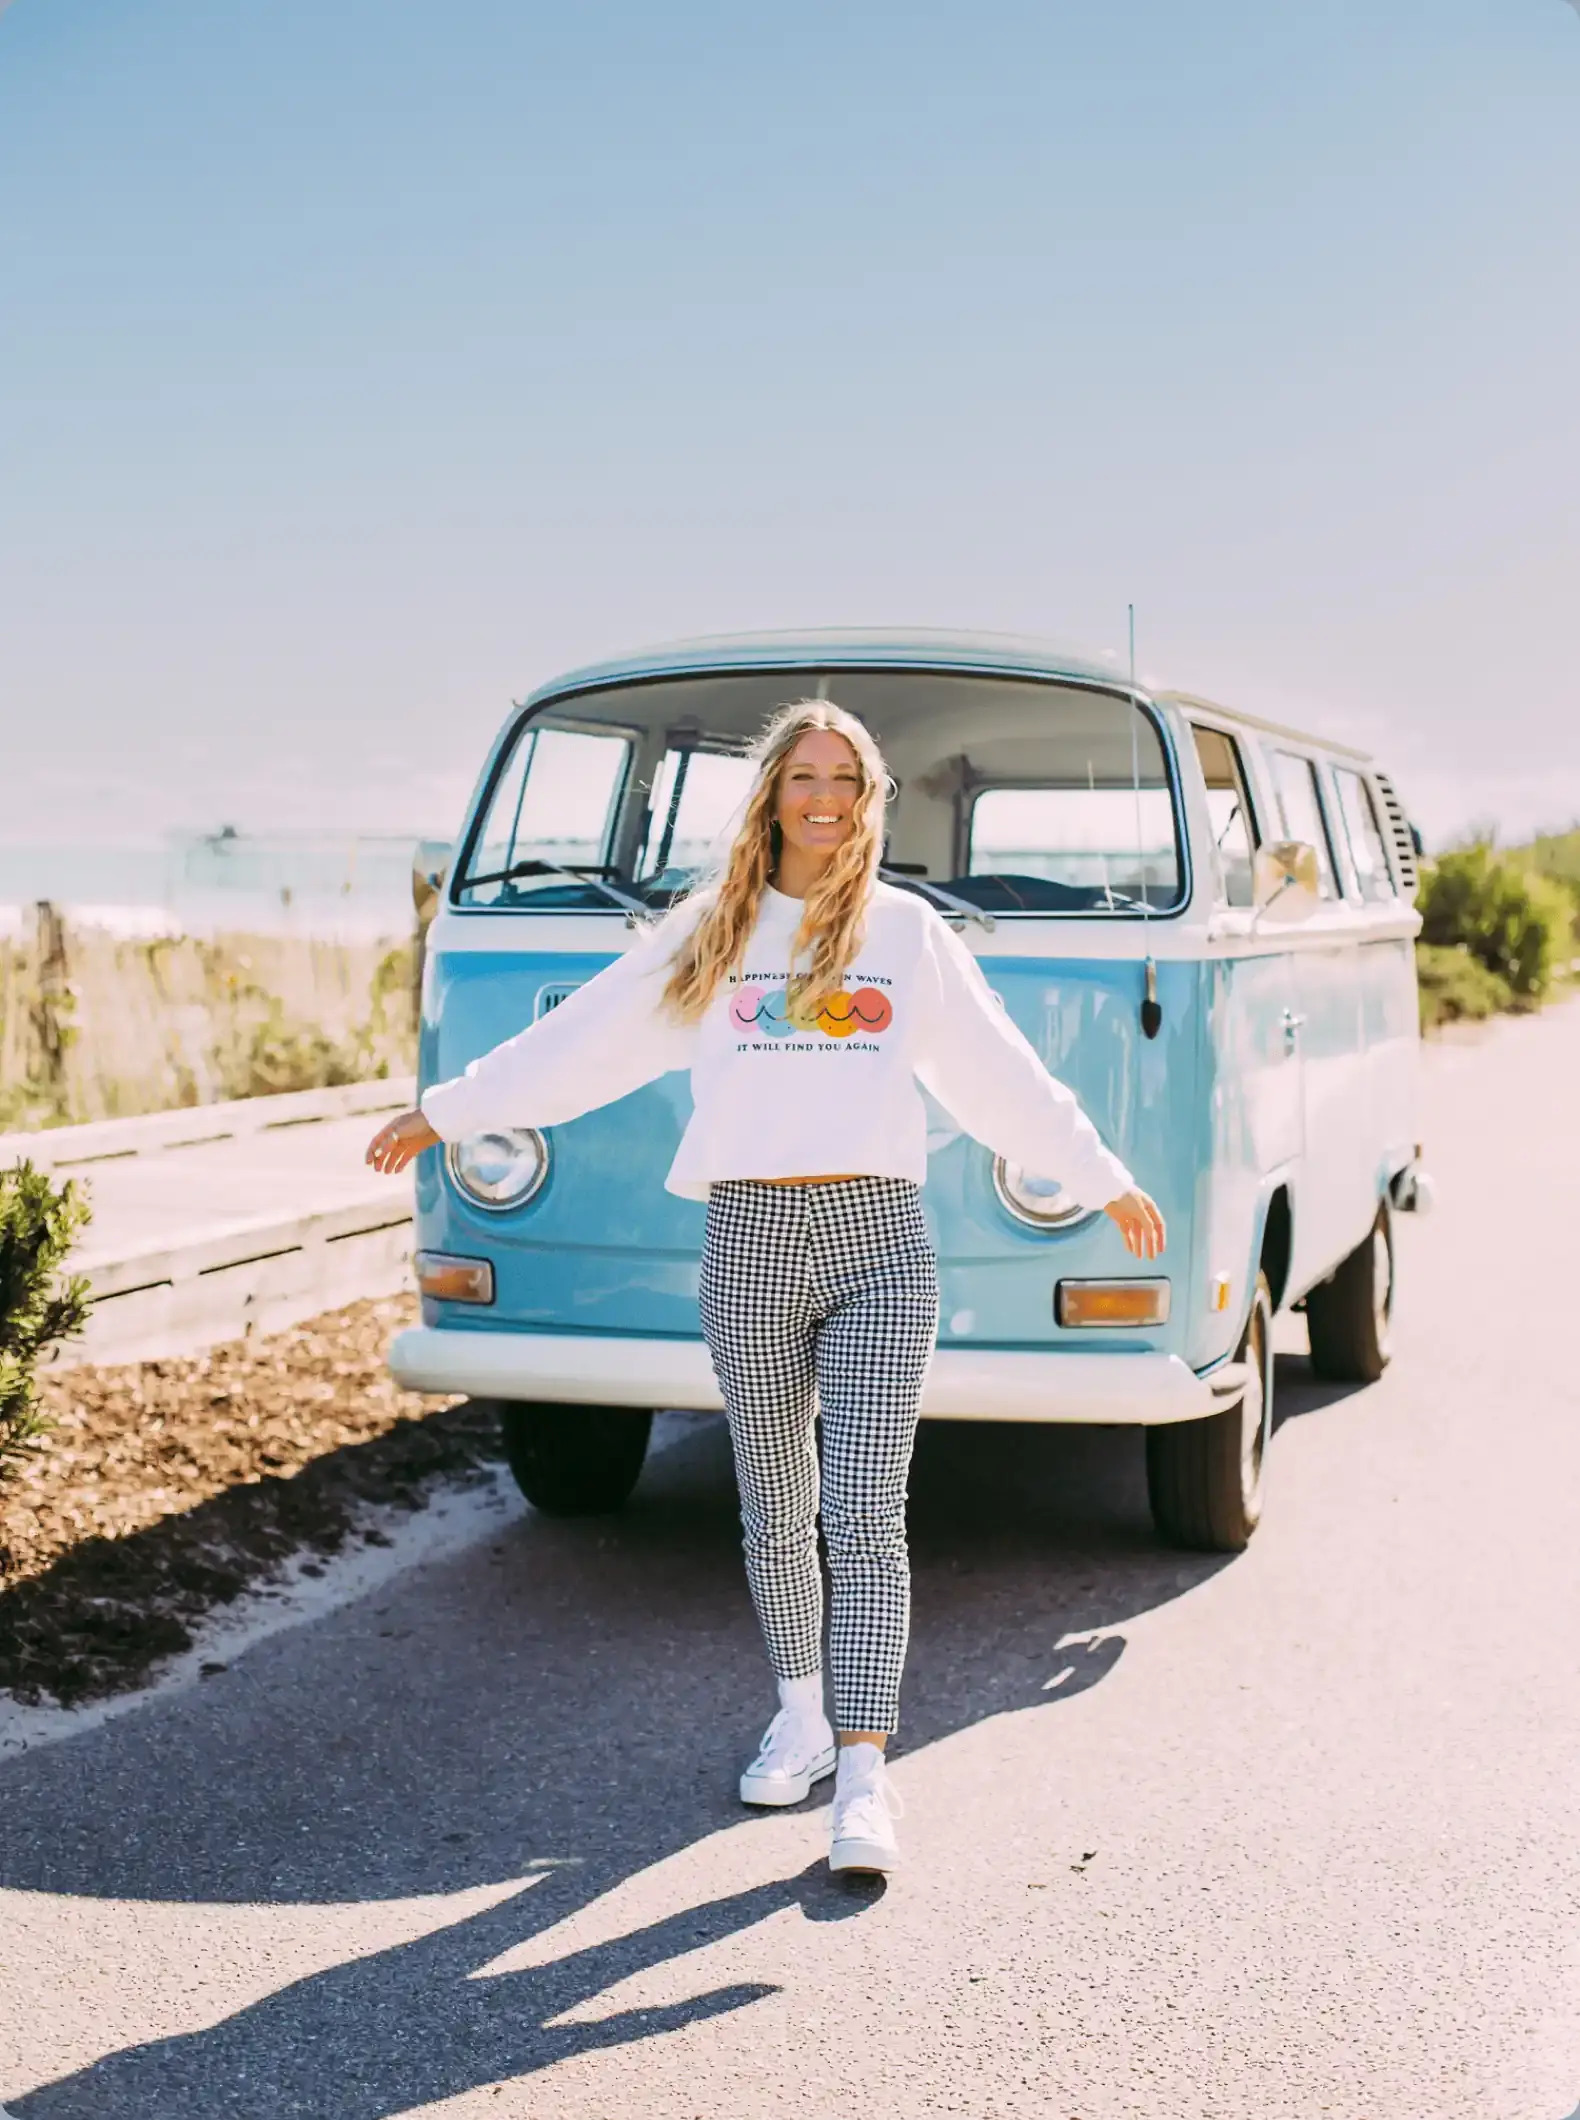 Devin Kane standing in front of a blue Volkswagen bus wearing her custom-designed sweatshirt.